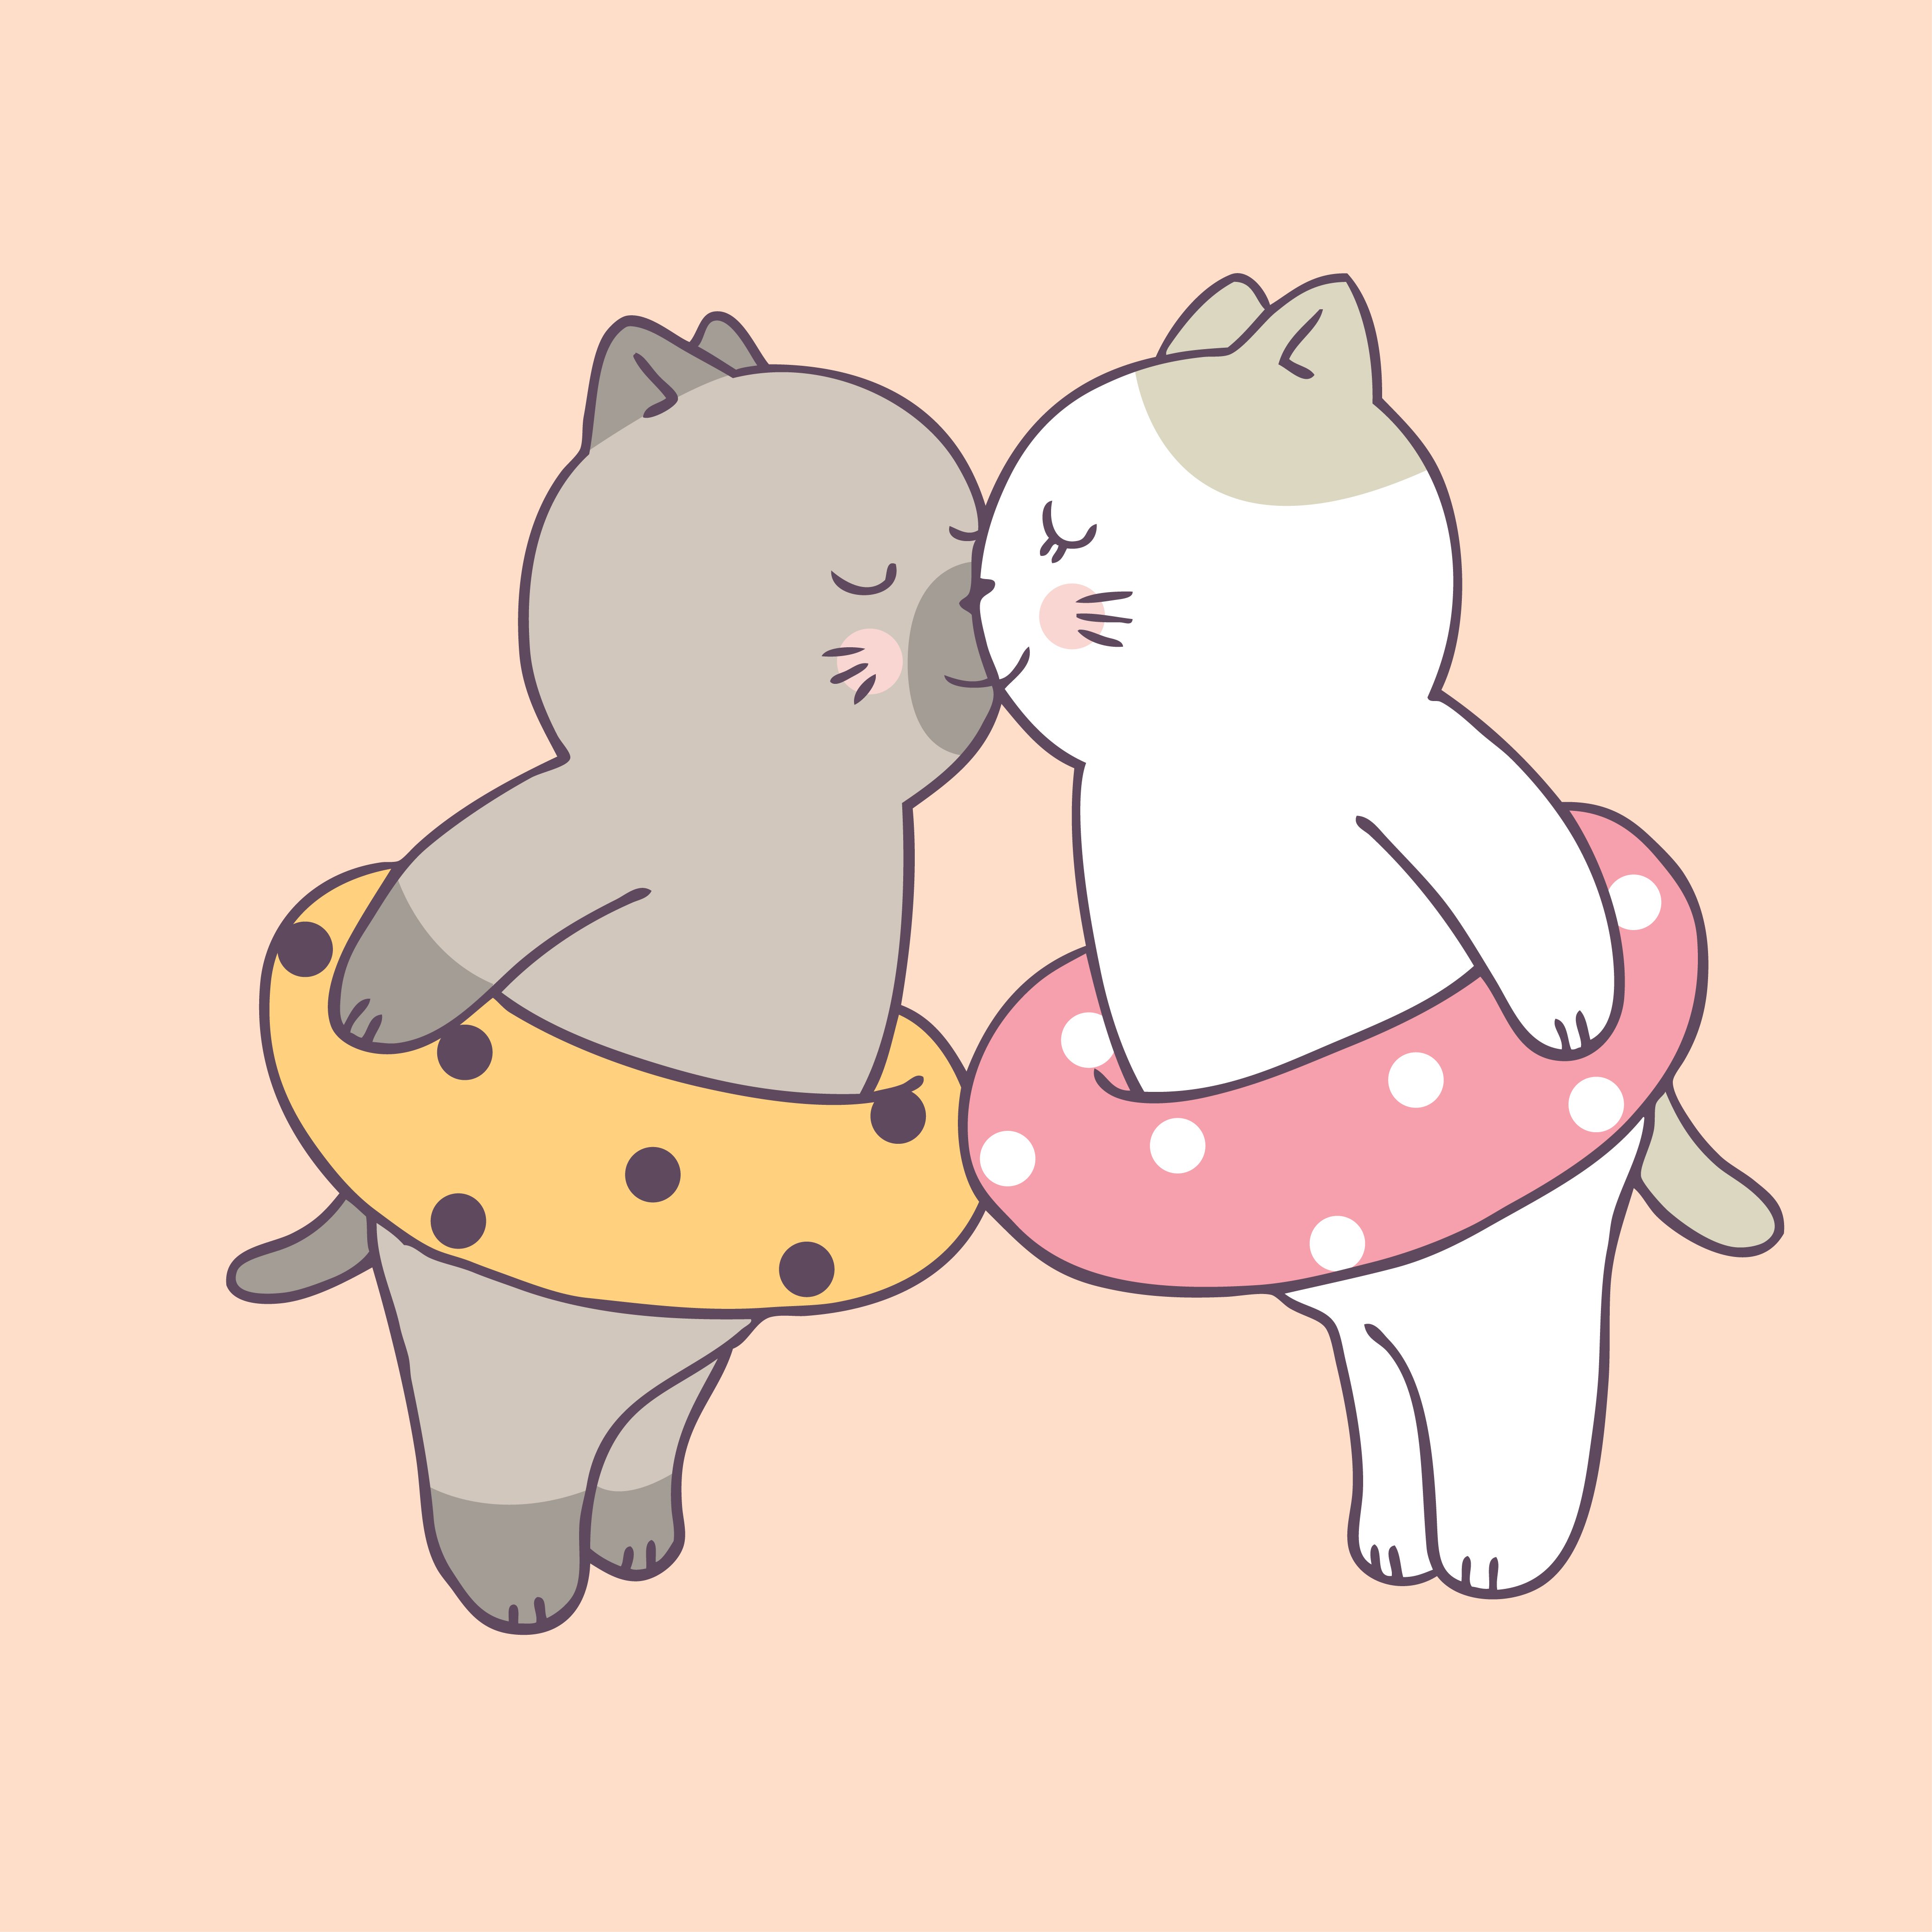 Cartoon cute summer couple cats kissing vector. Download